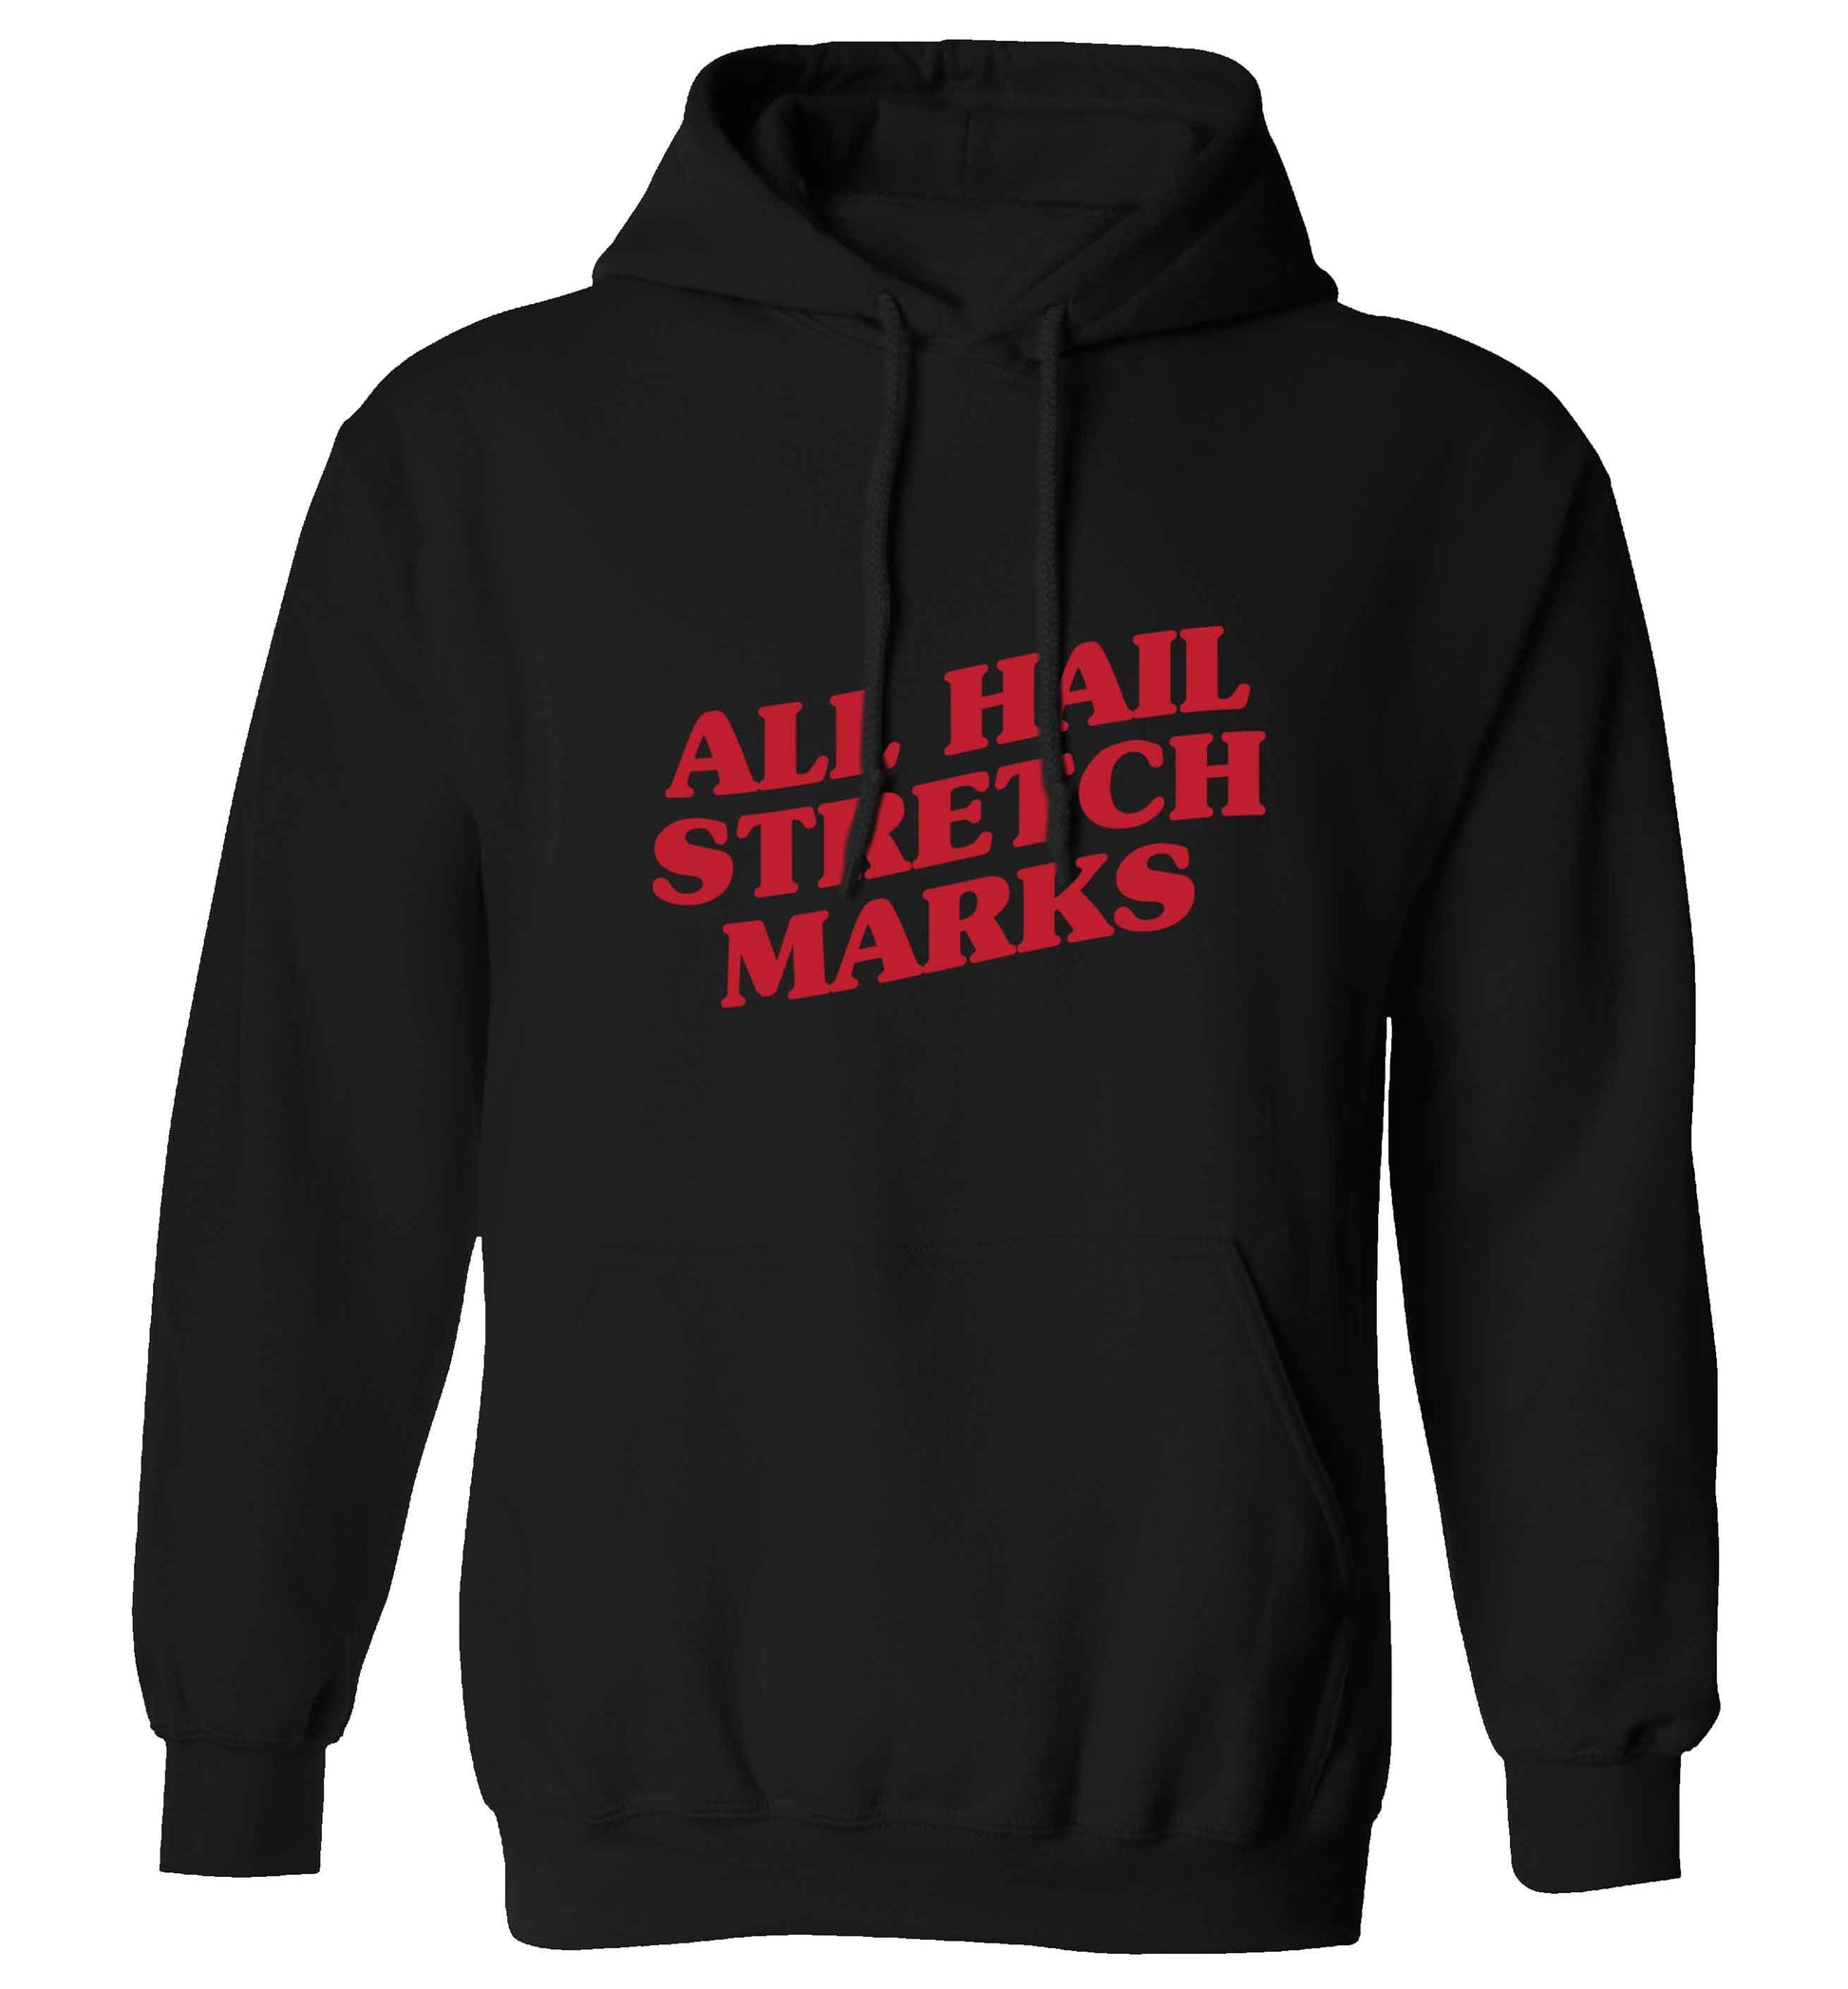 All hail stretch marks adults unisex black hoodie 2XL